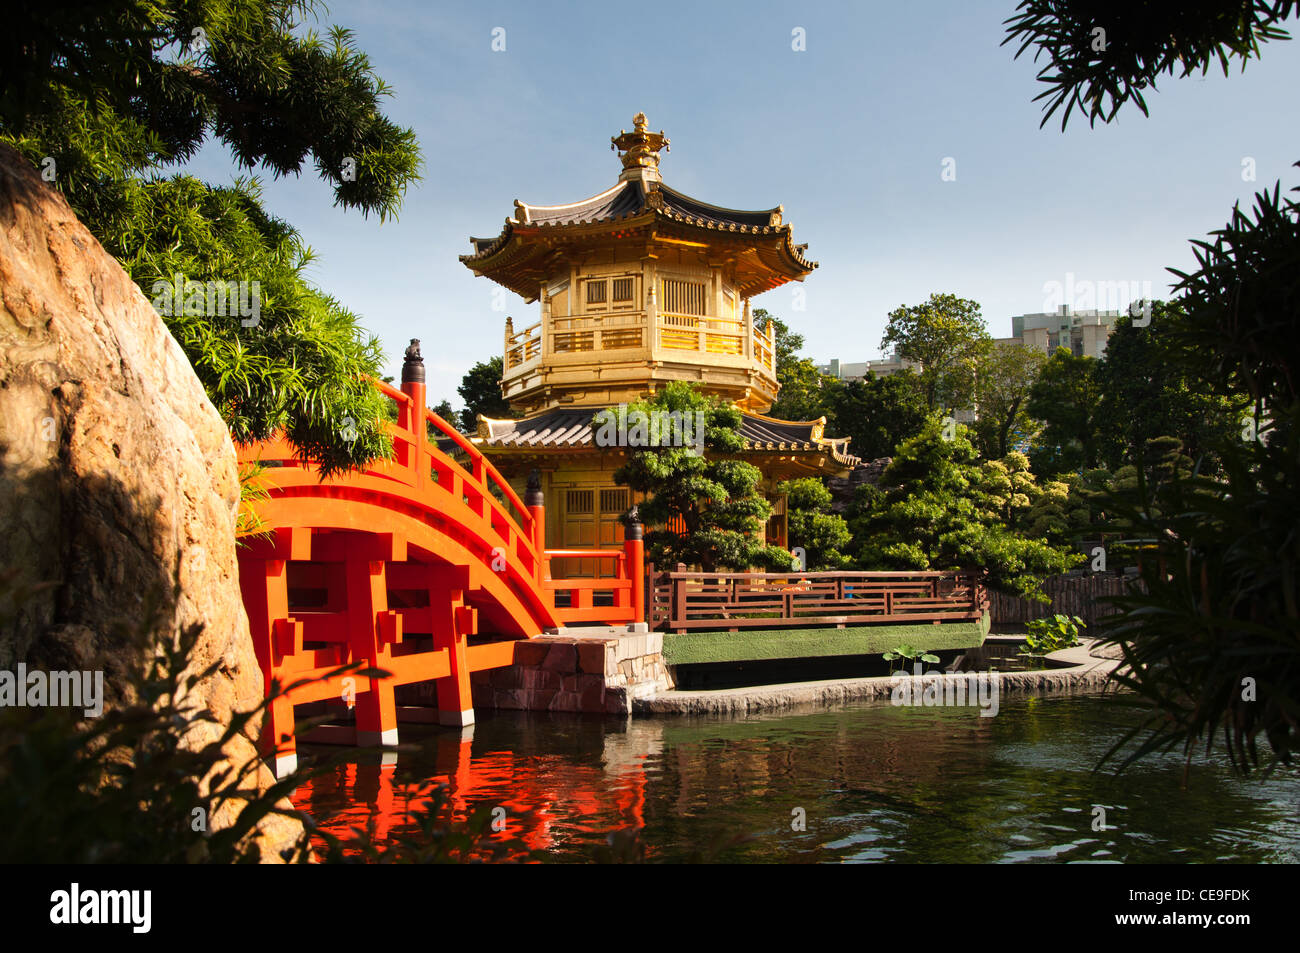 The Pavilion of Absolute Perfection in the Nan Lian Garden, Hong Kong. Stock Photo